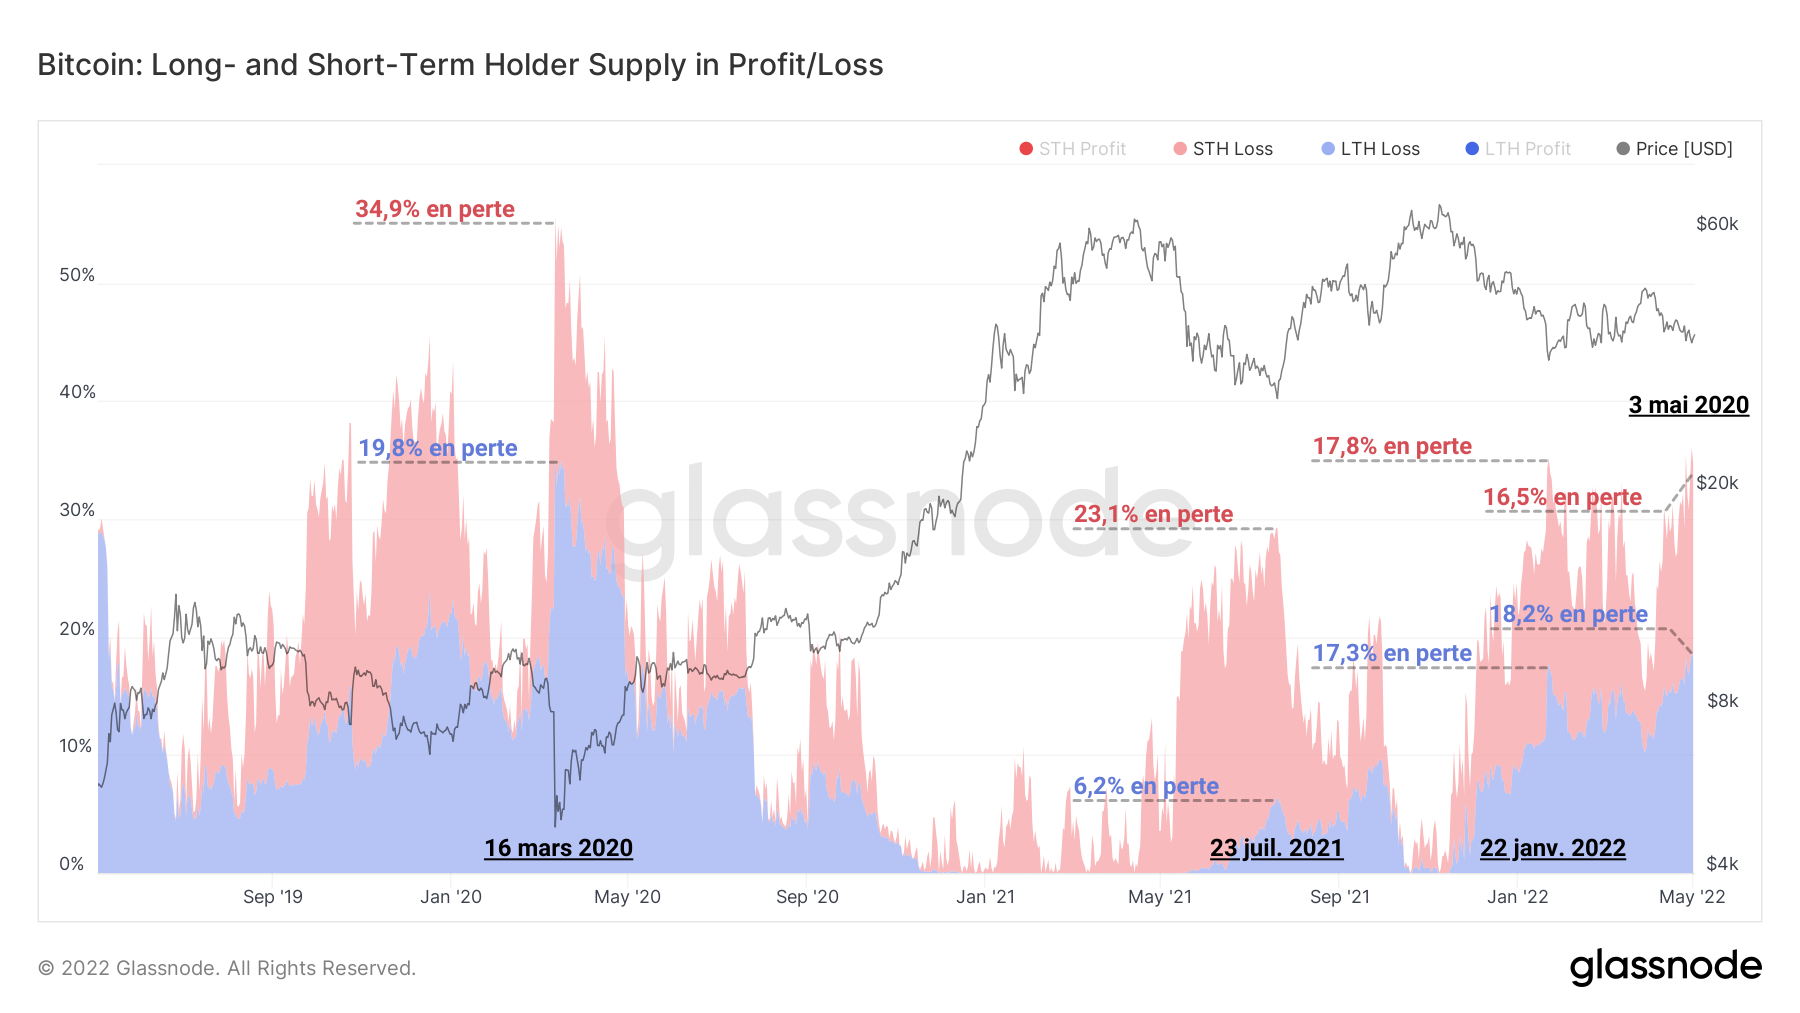 BTC LTH-STH Profit/Loss Supply 030522